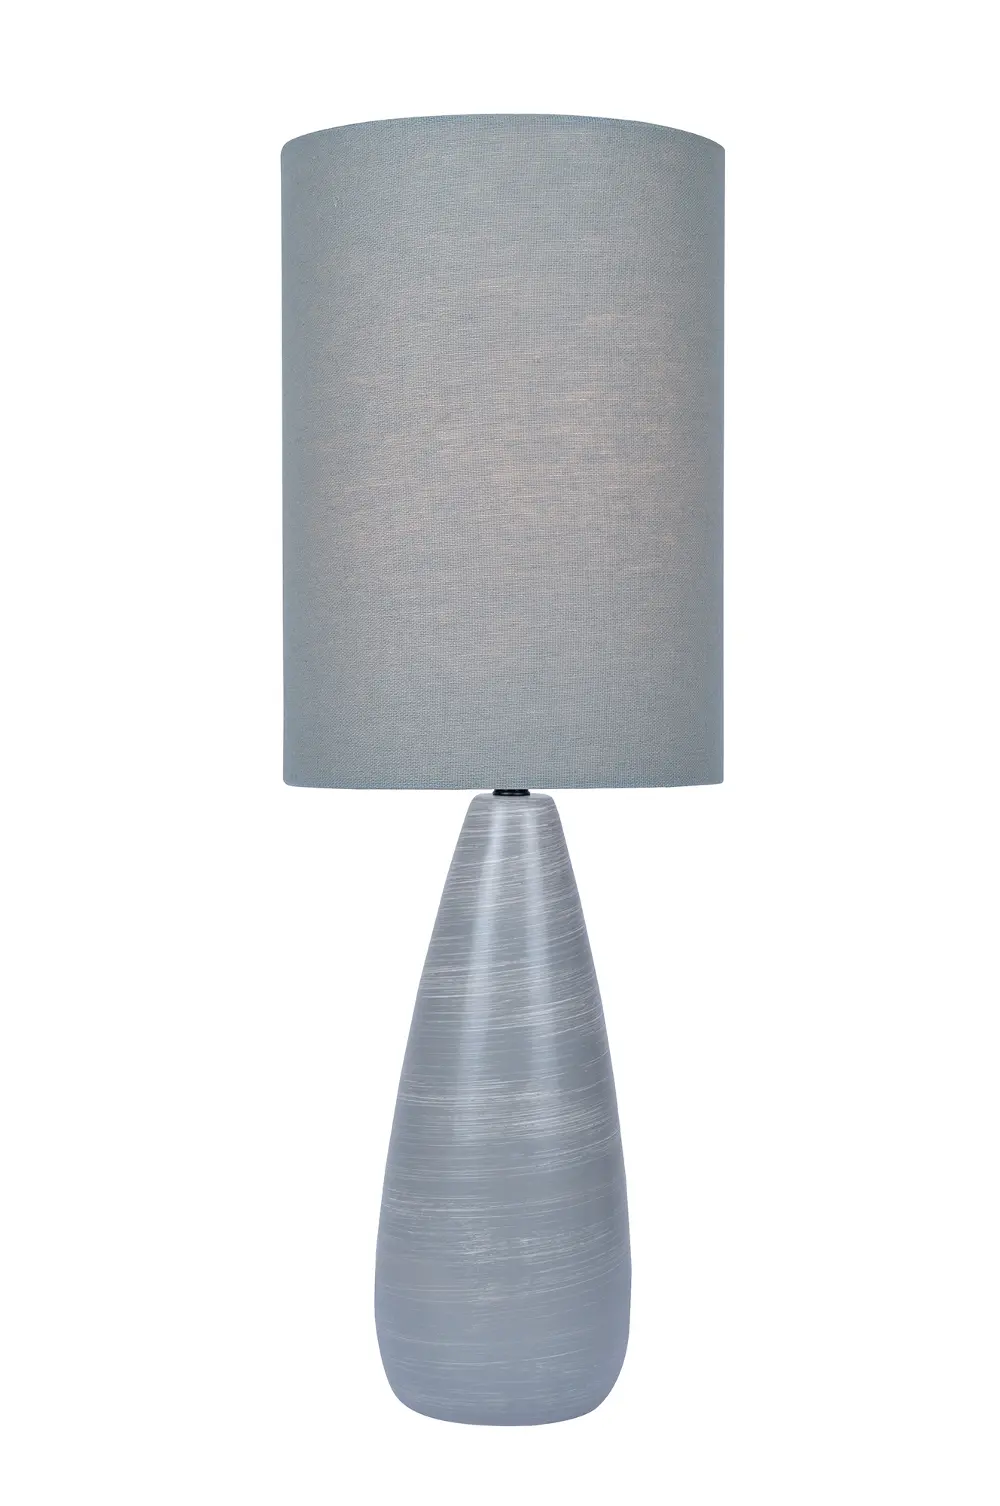 Gray Modern Table Lamp with Gray Shade - Quatro-1